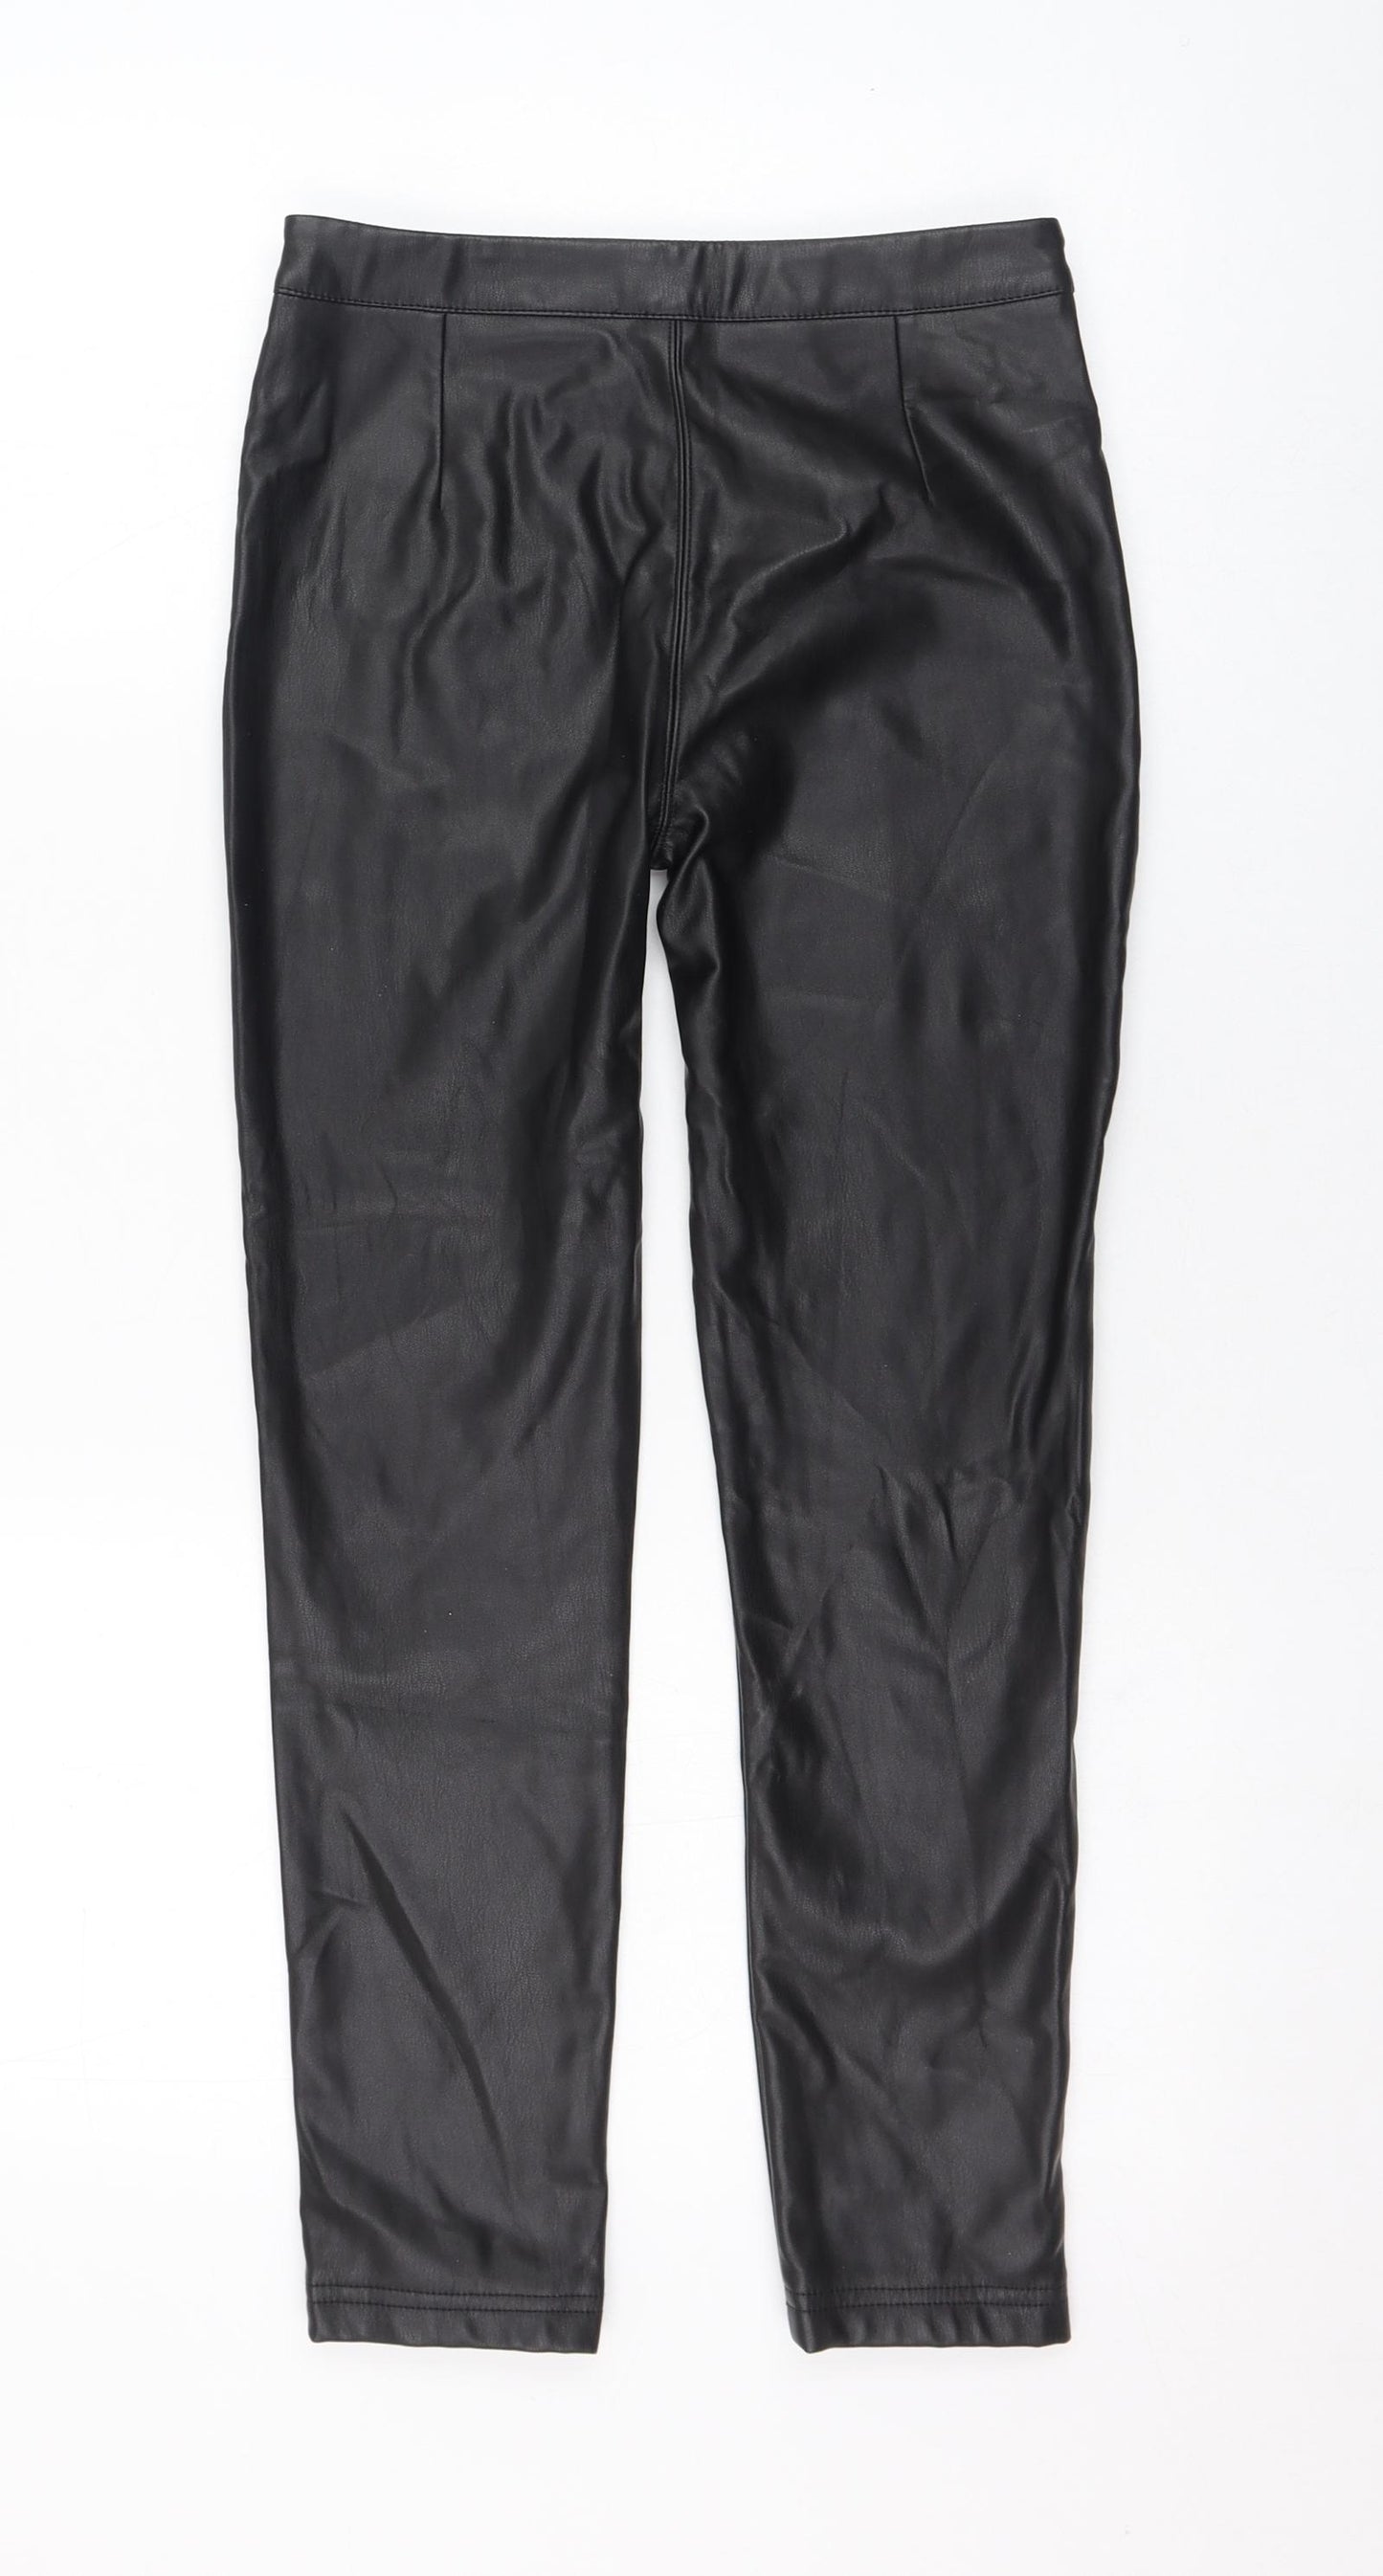 River Island Girls Black  Polyester Capri Trousers Size 11 Years  Regular Zip - Leggings